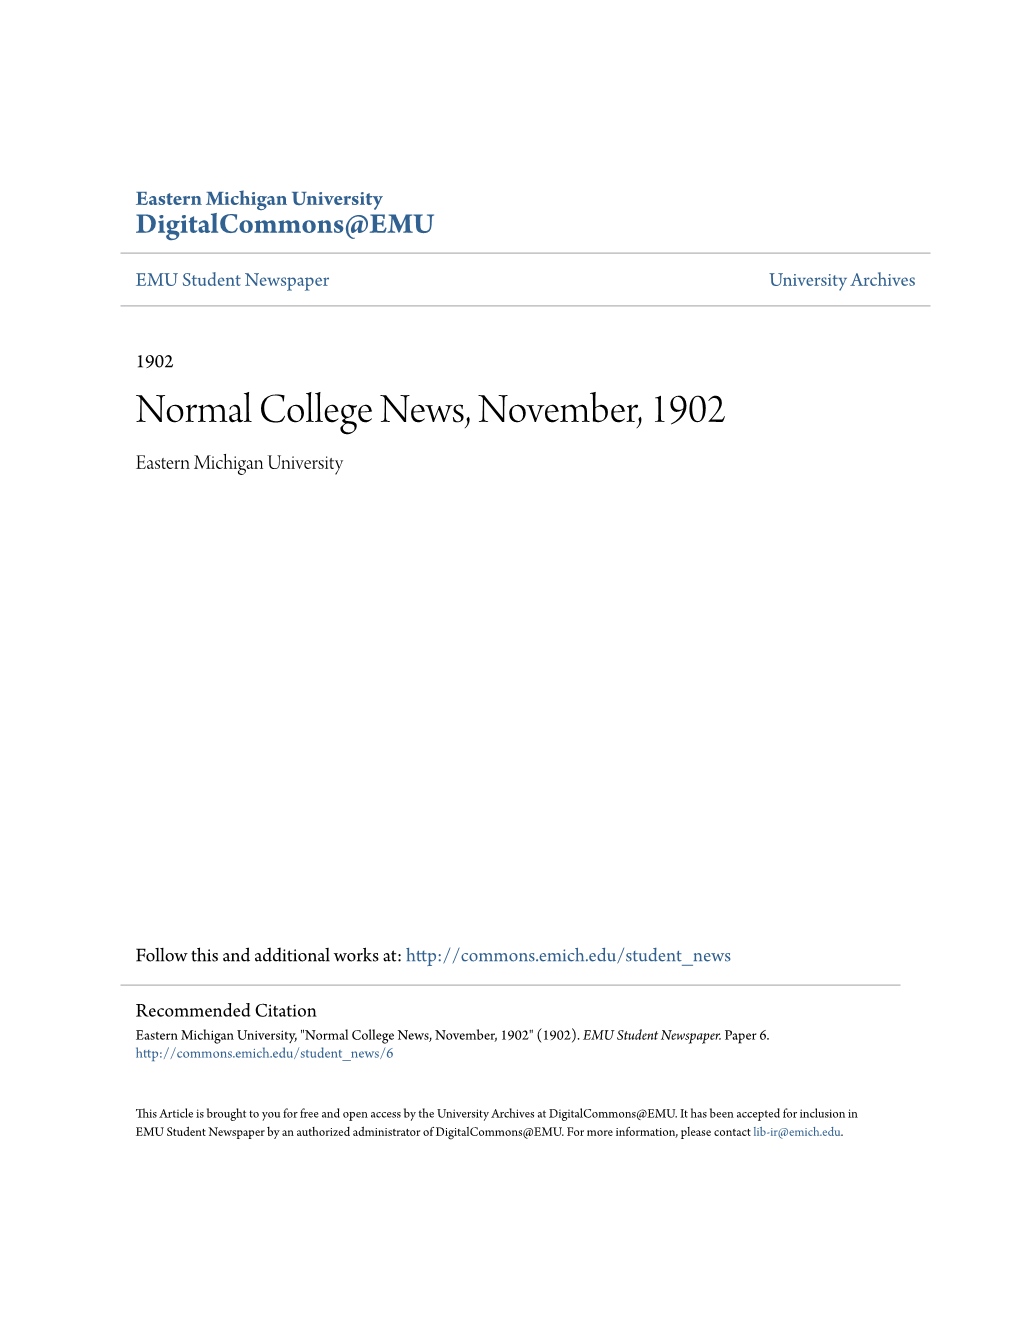 Normal College News, November, 1902 Eastern Michigan University